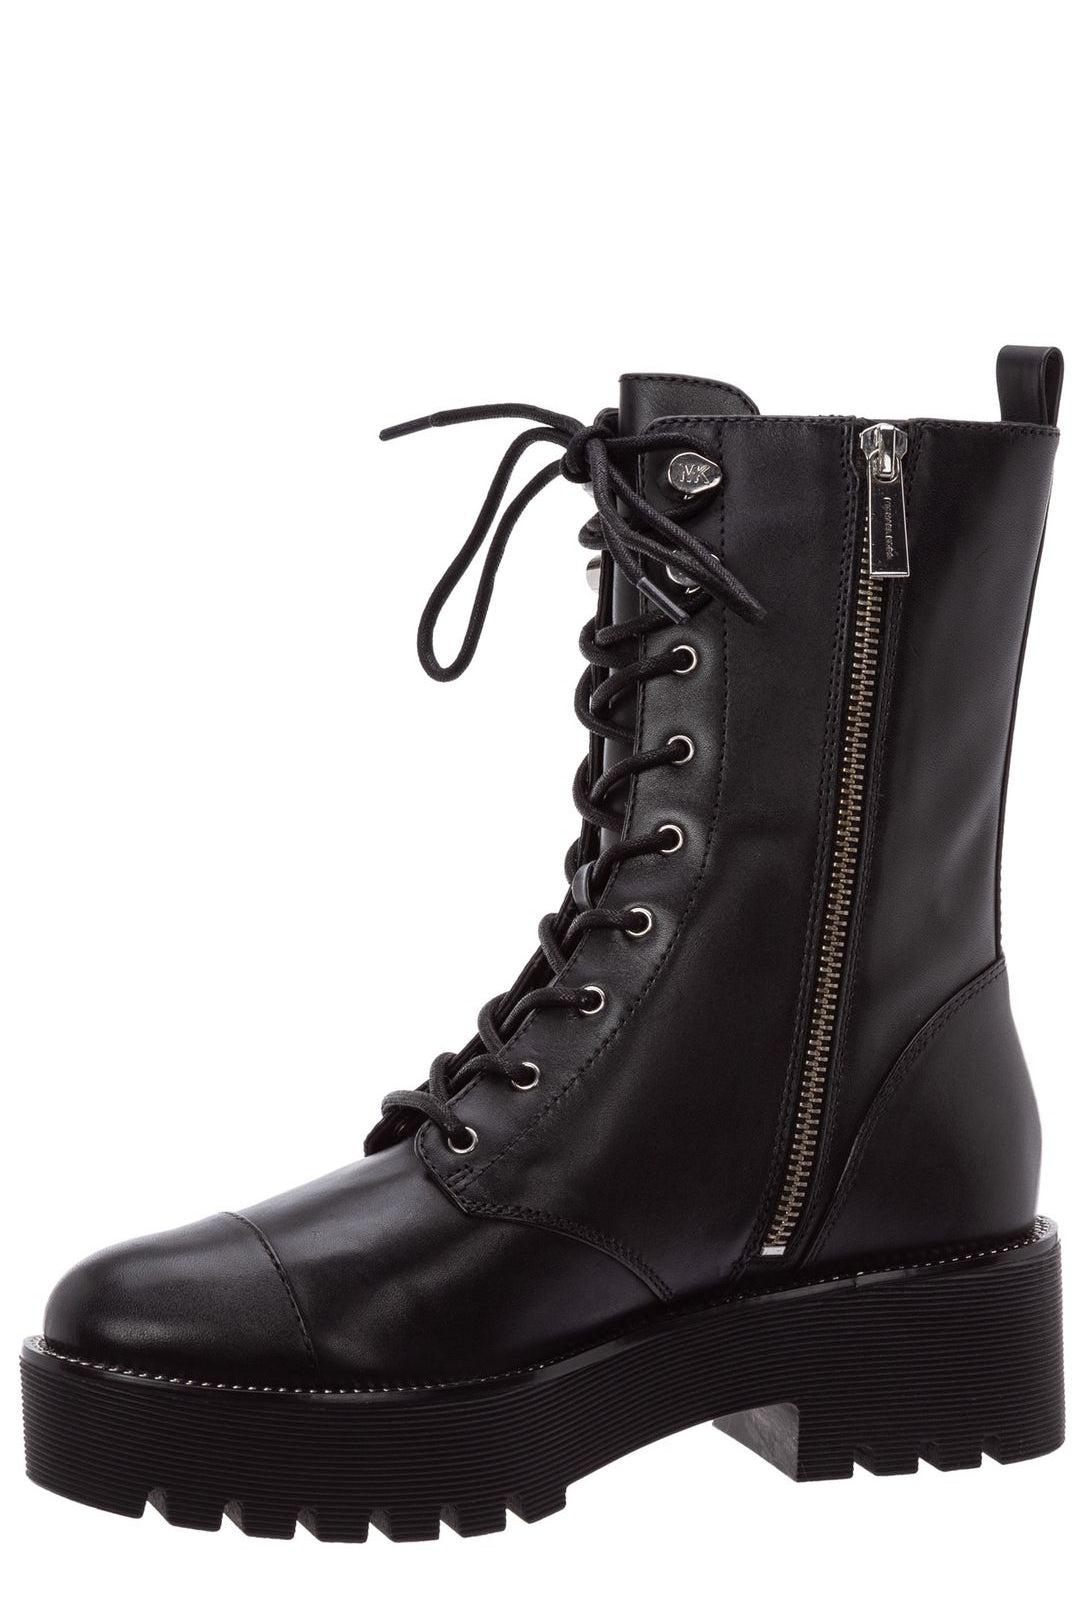 Michael Kors Leather Bryce Platform Combat Boots in Black | Lyst